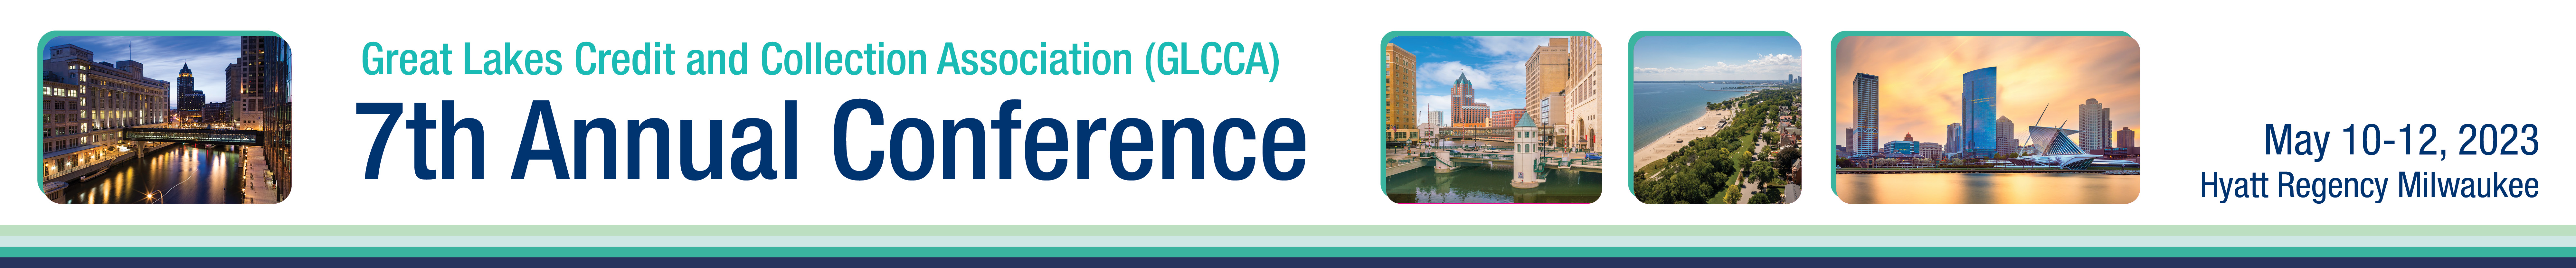 2023 GLCCA Conference - ACA International